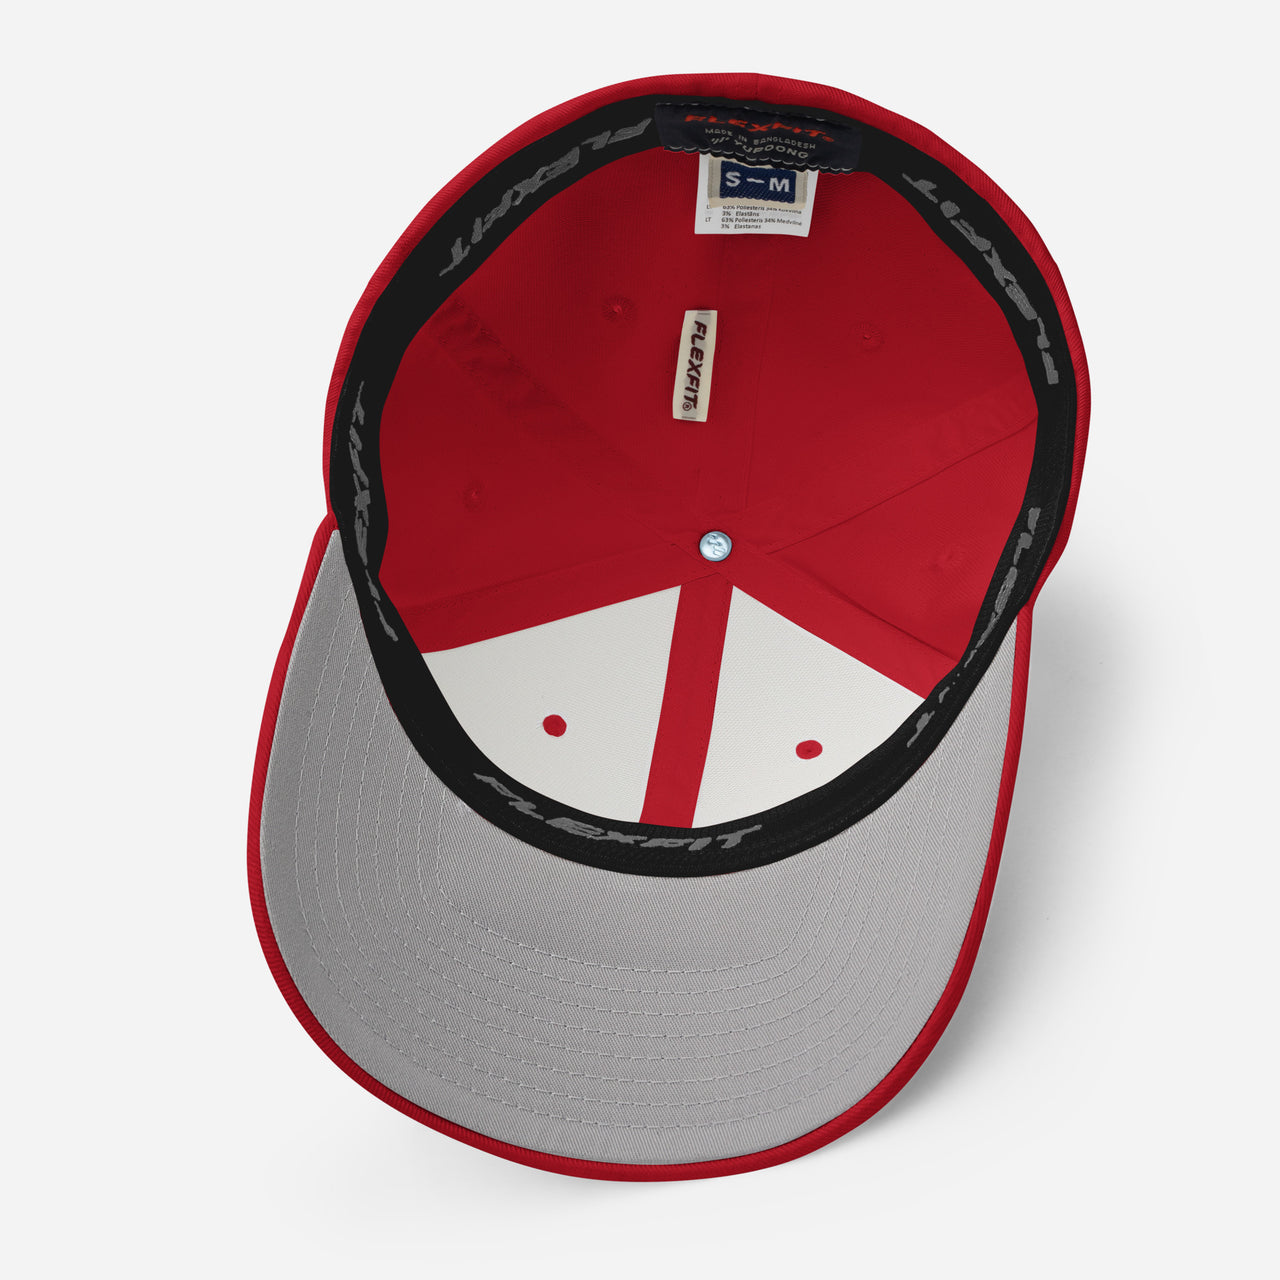 Square Body C10 Truck Flexfit Hat in red - underside